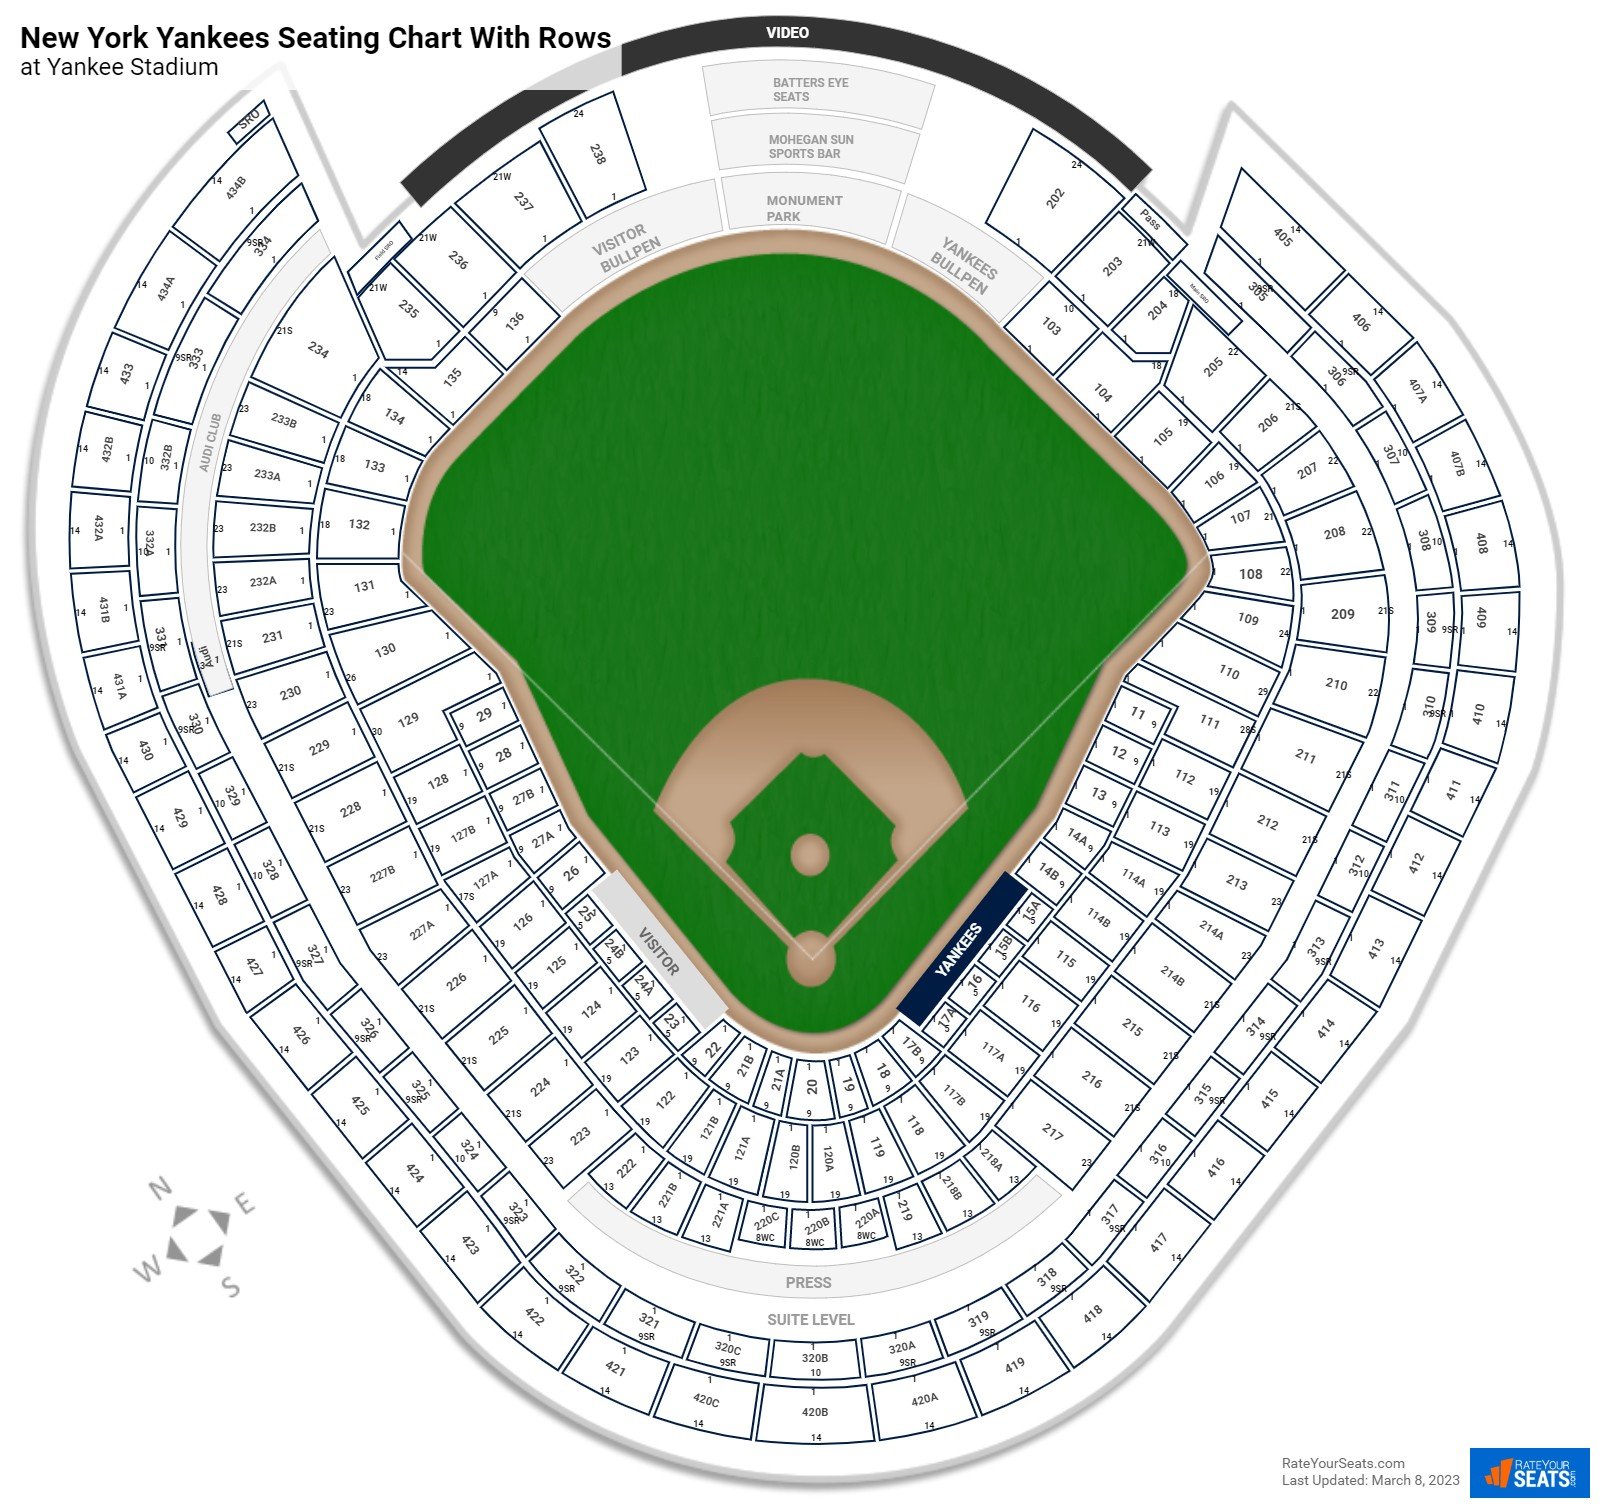 Yankee Stadium seating chart with row numbers